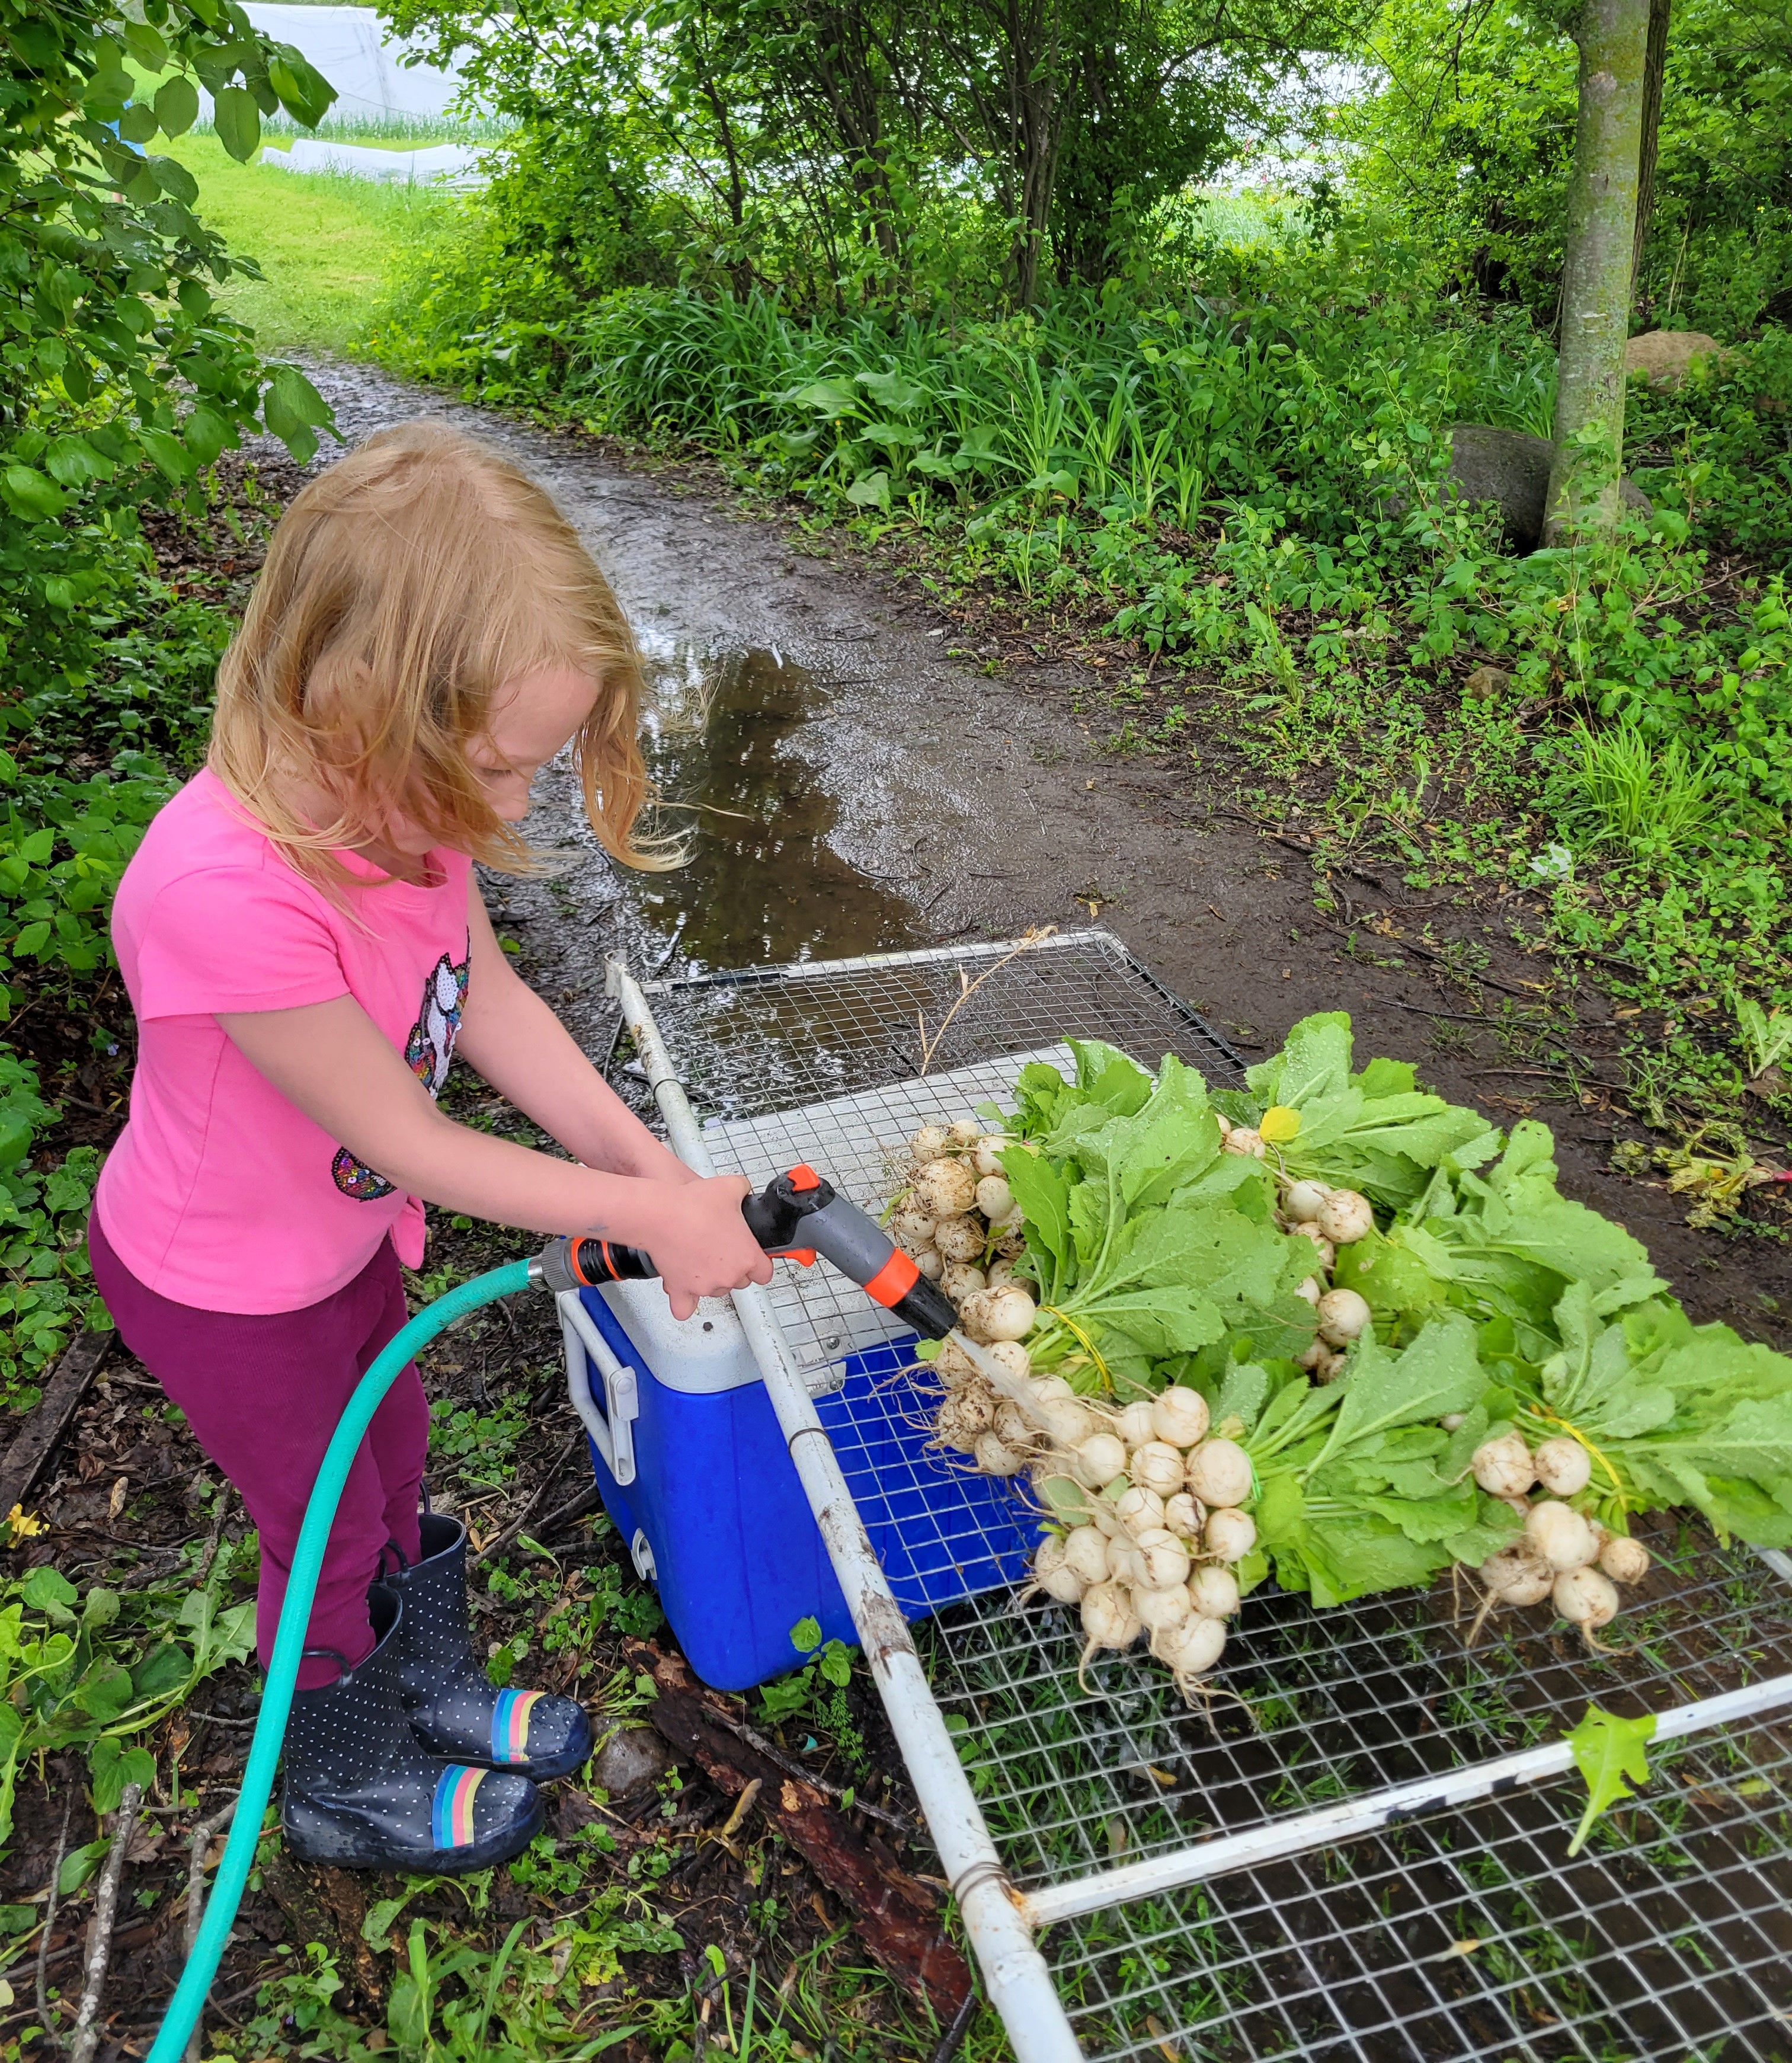 Little girl washing produce